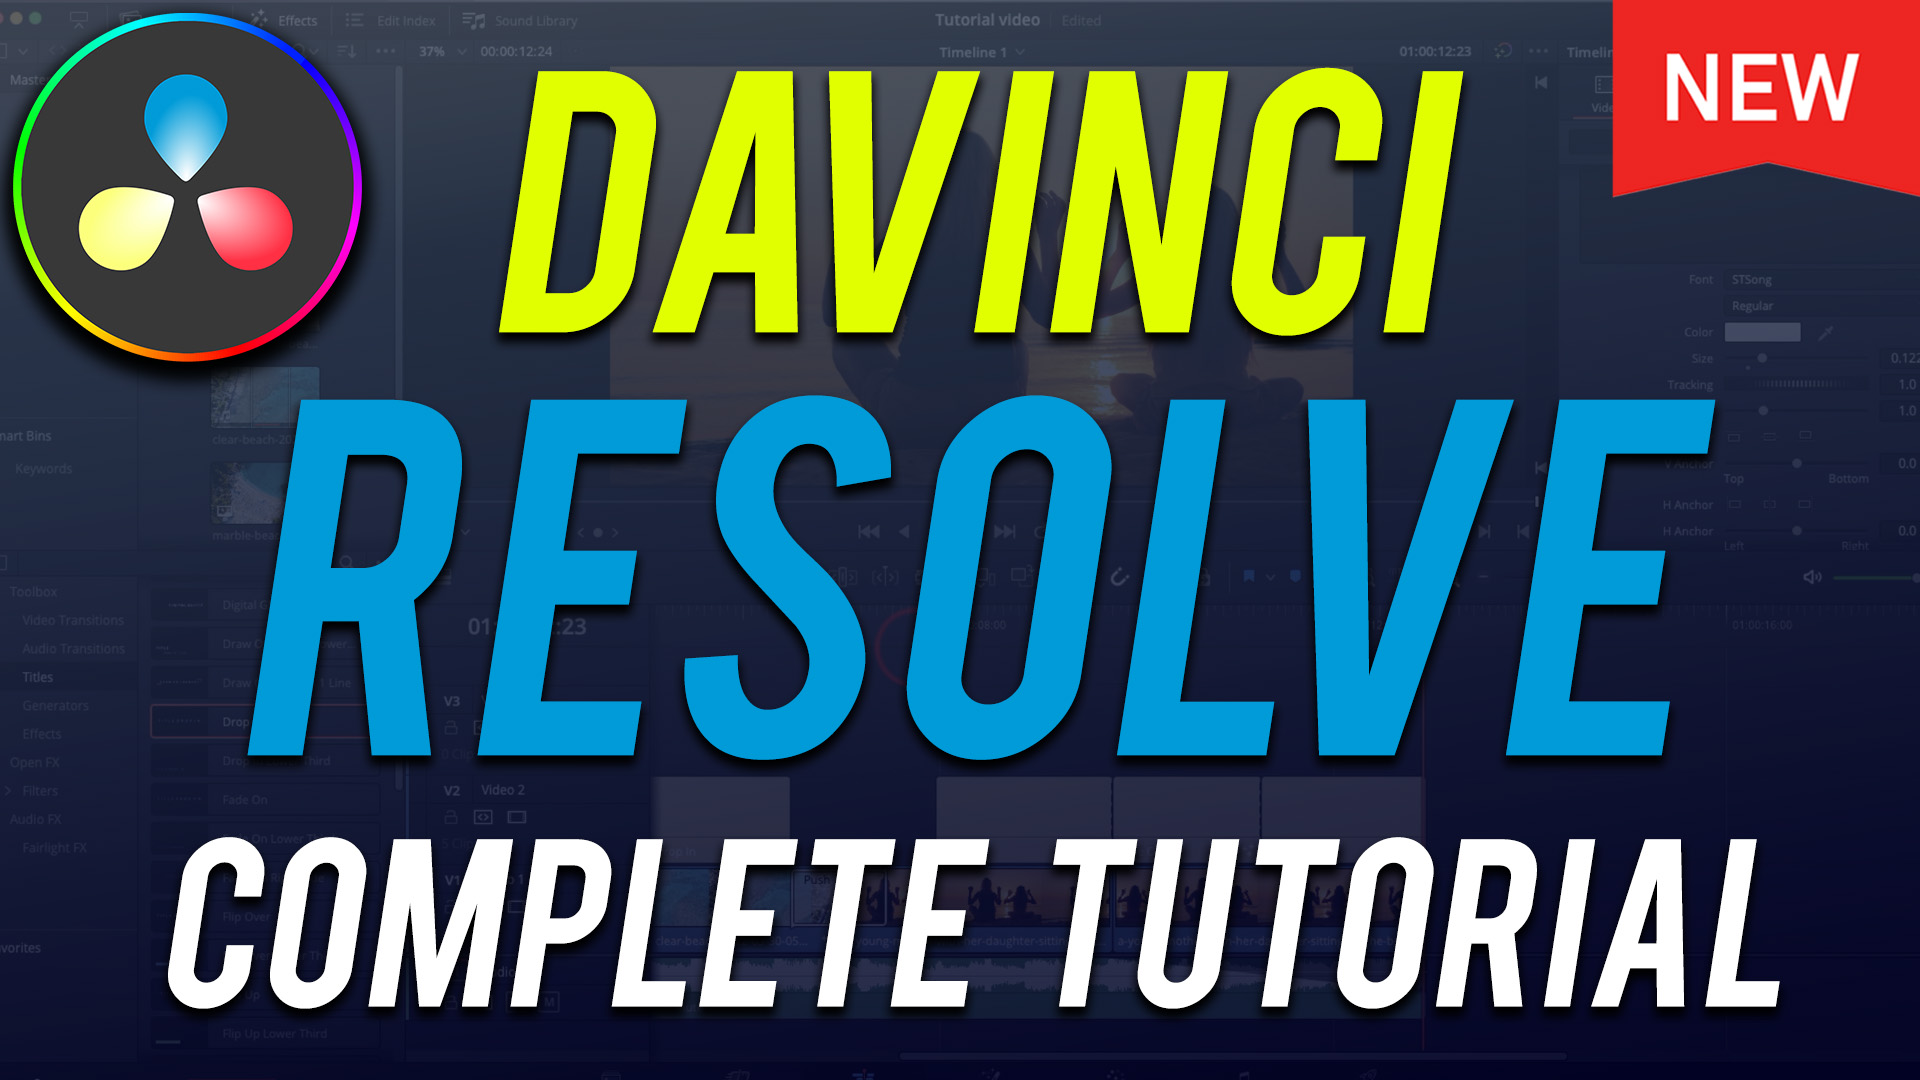 DaVinci Resolve 18.6.2.2 instal the new version for windows